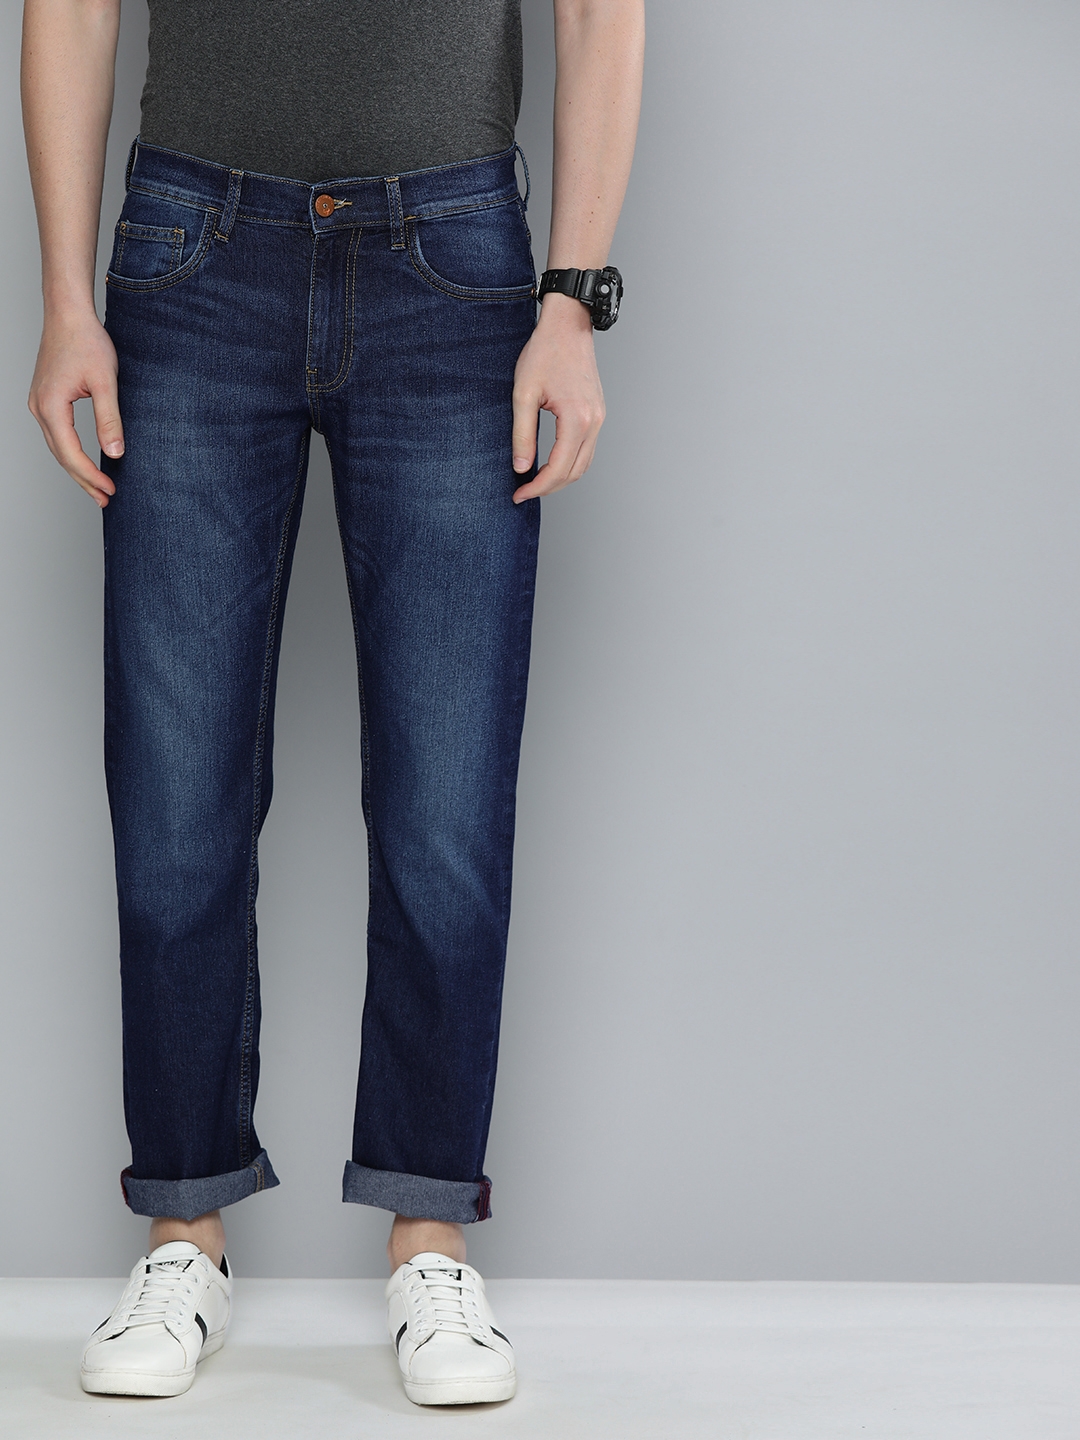 American Bull | American Bull Men Cotton Casual Slim Fit Blue Jeans